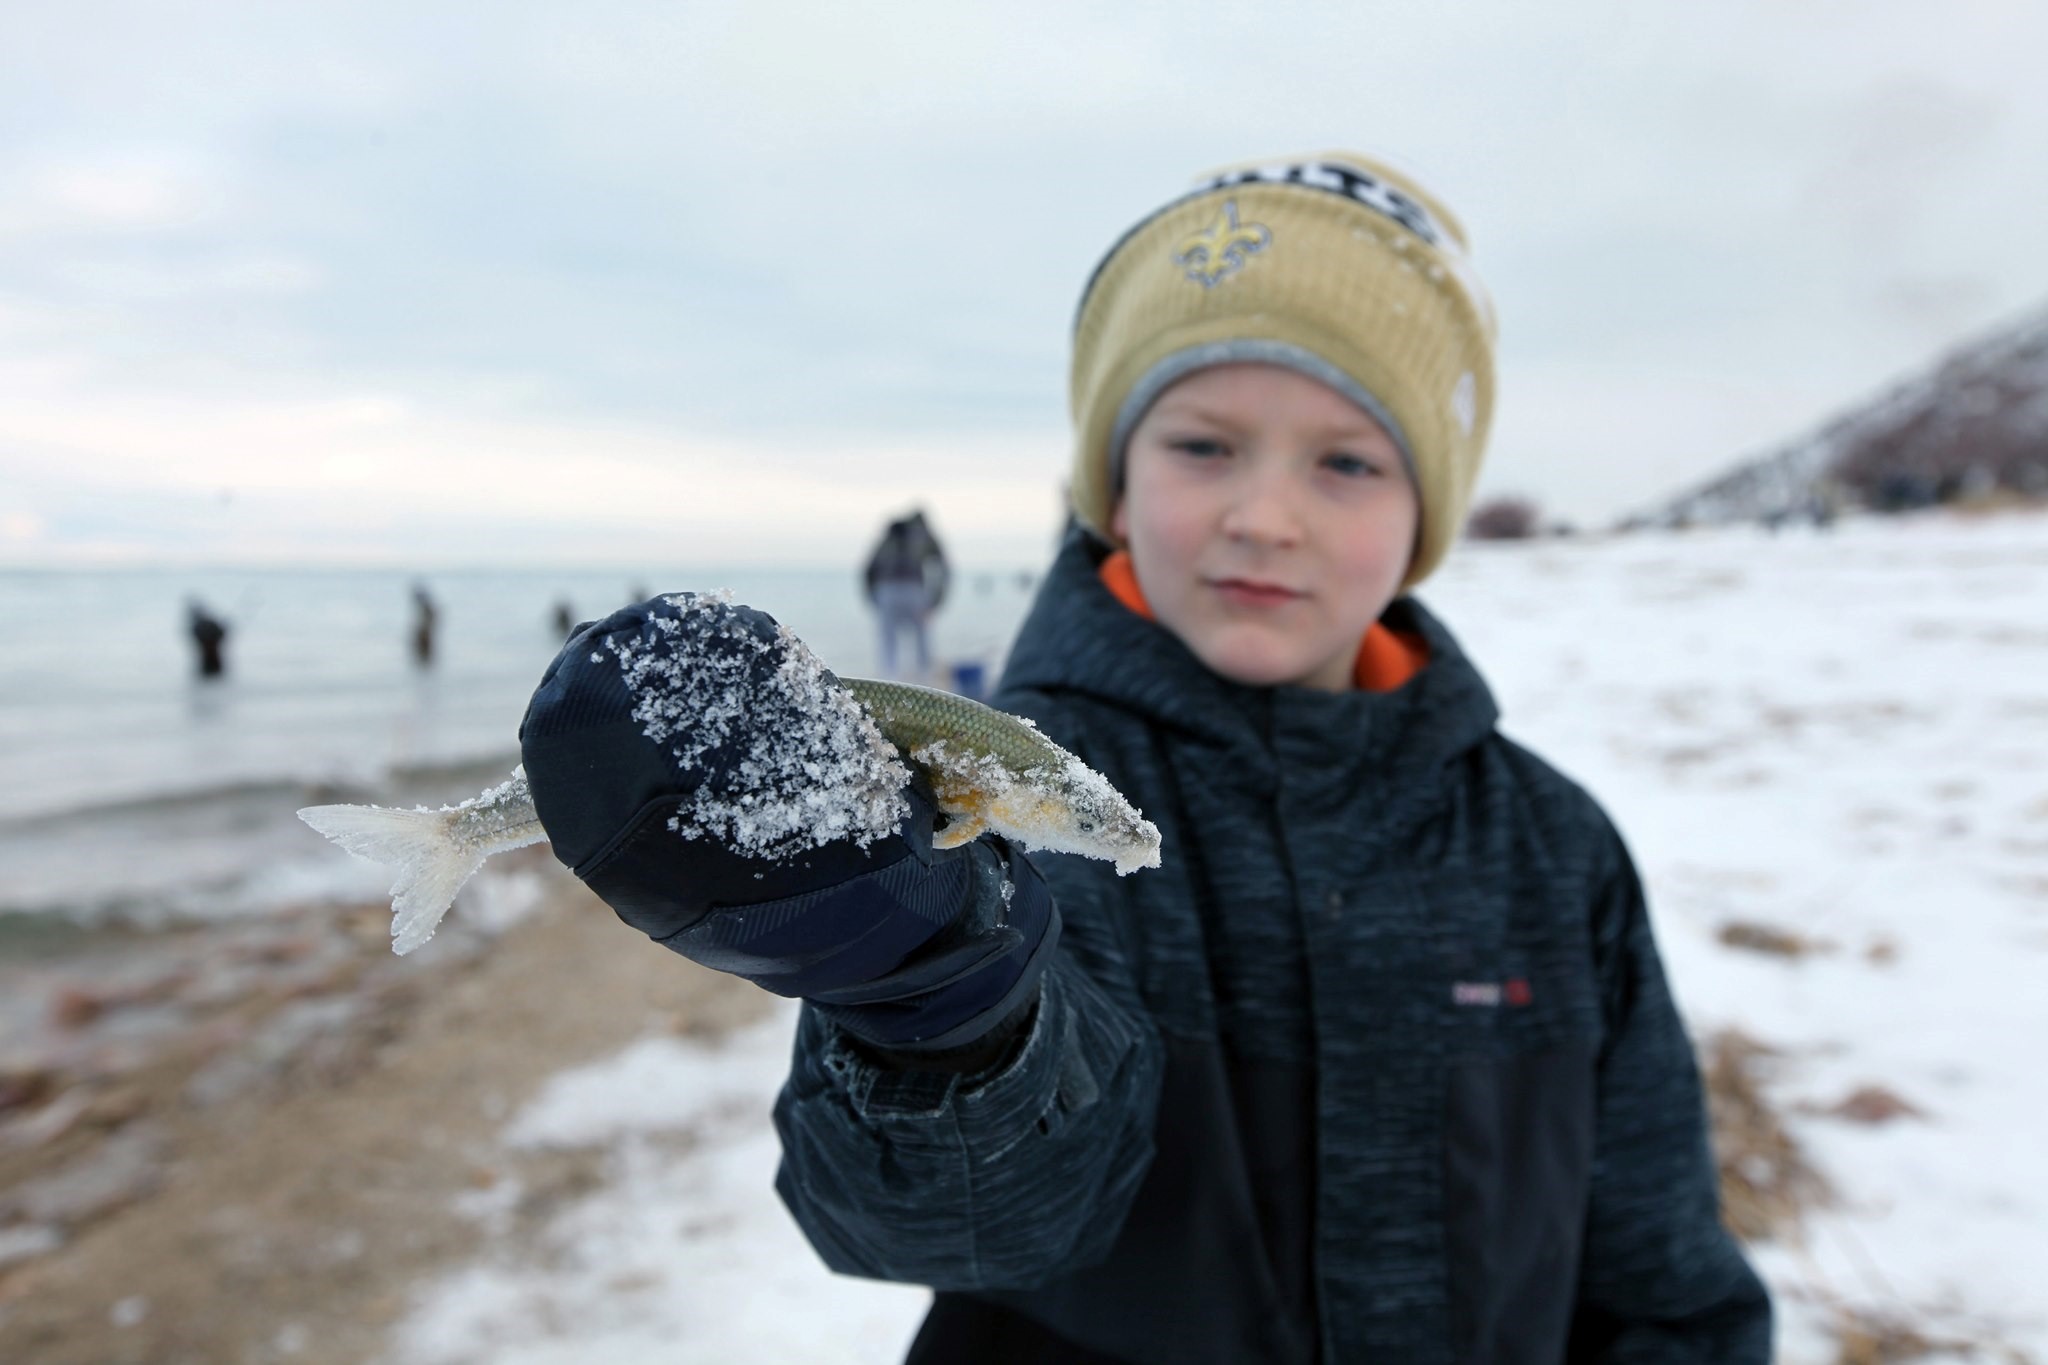 Kid holding a cisco fish at winterfest...